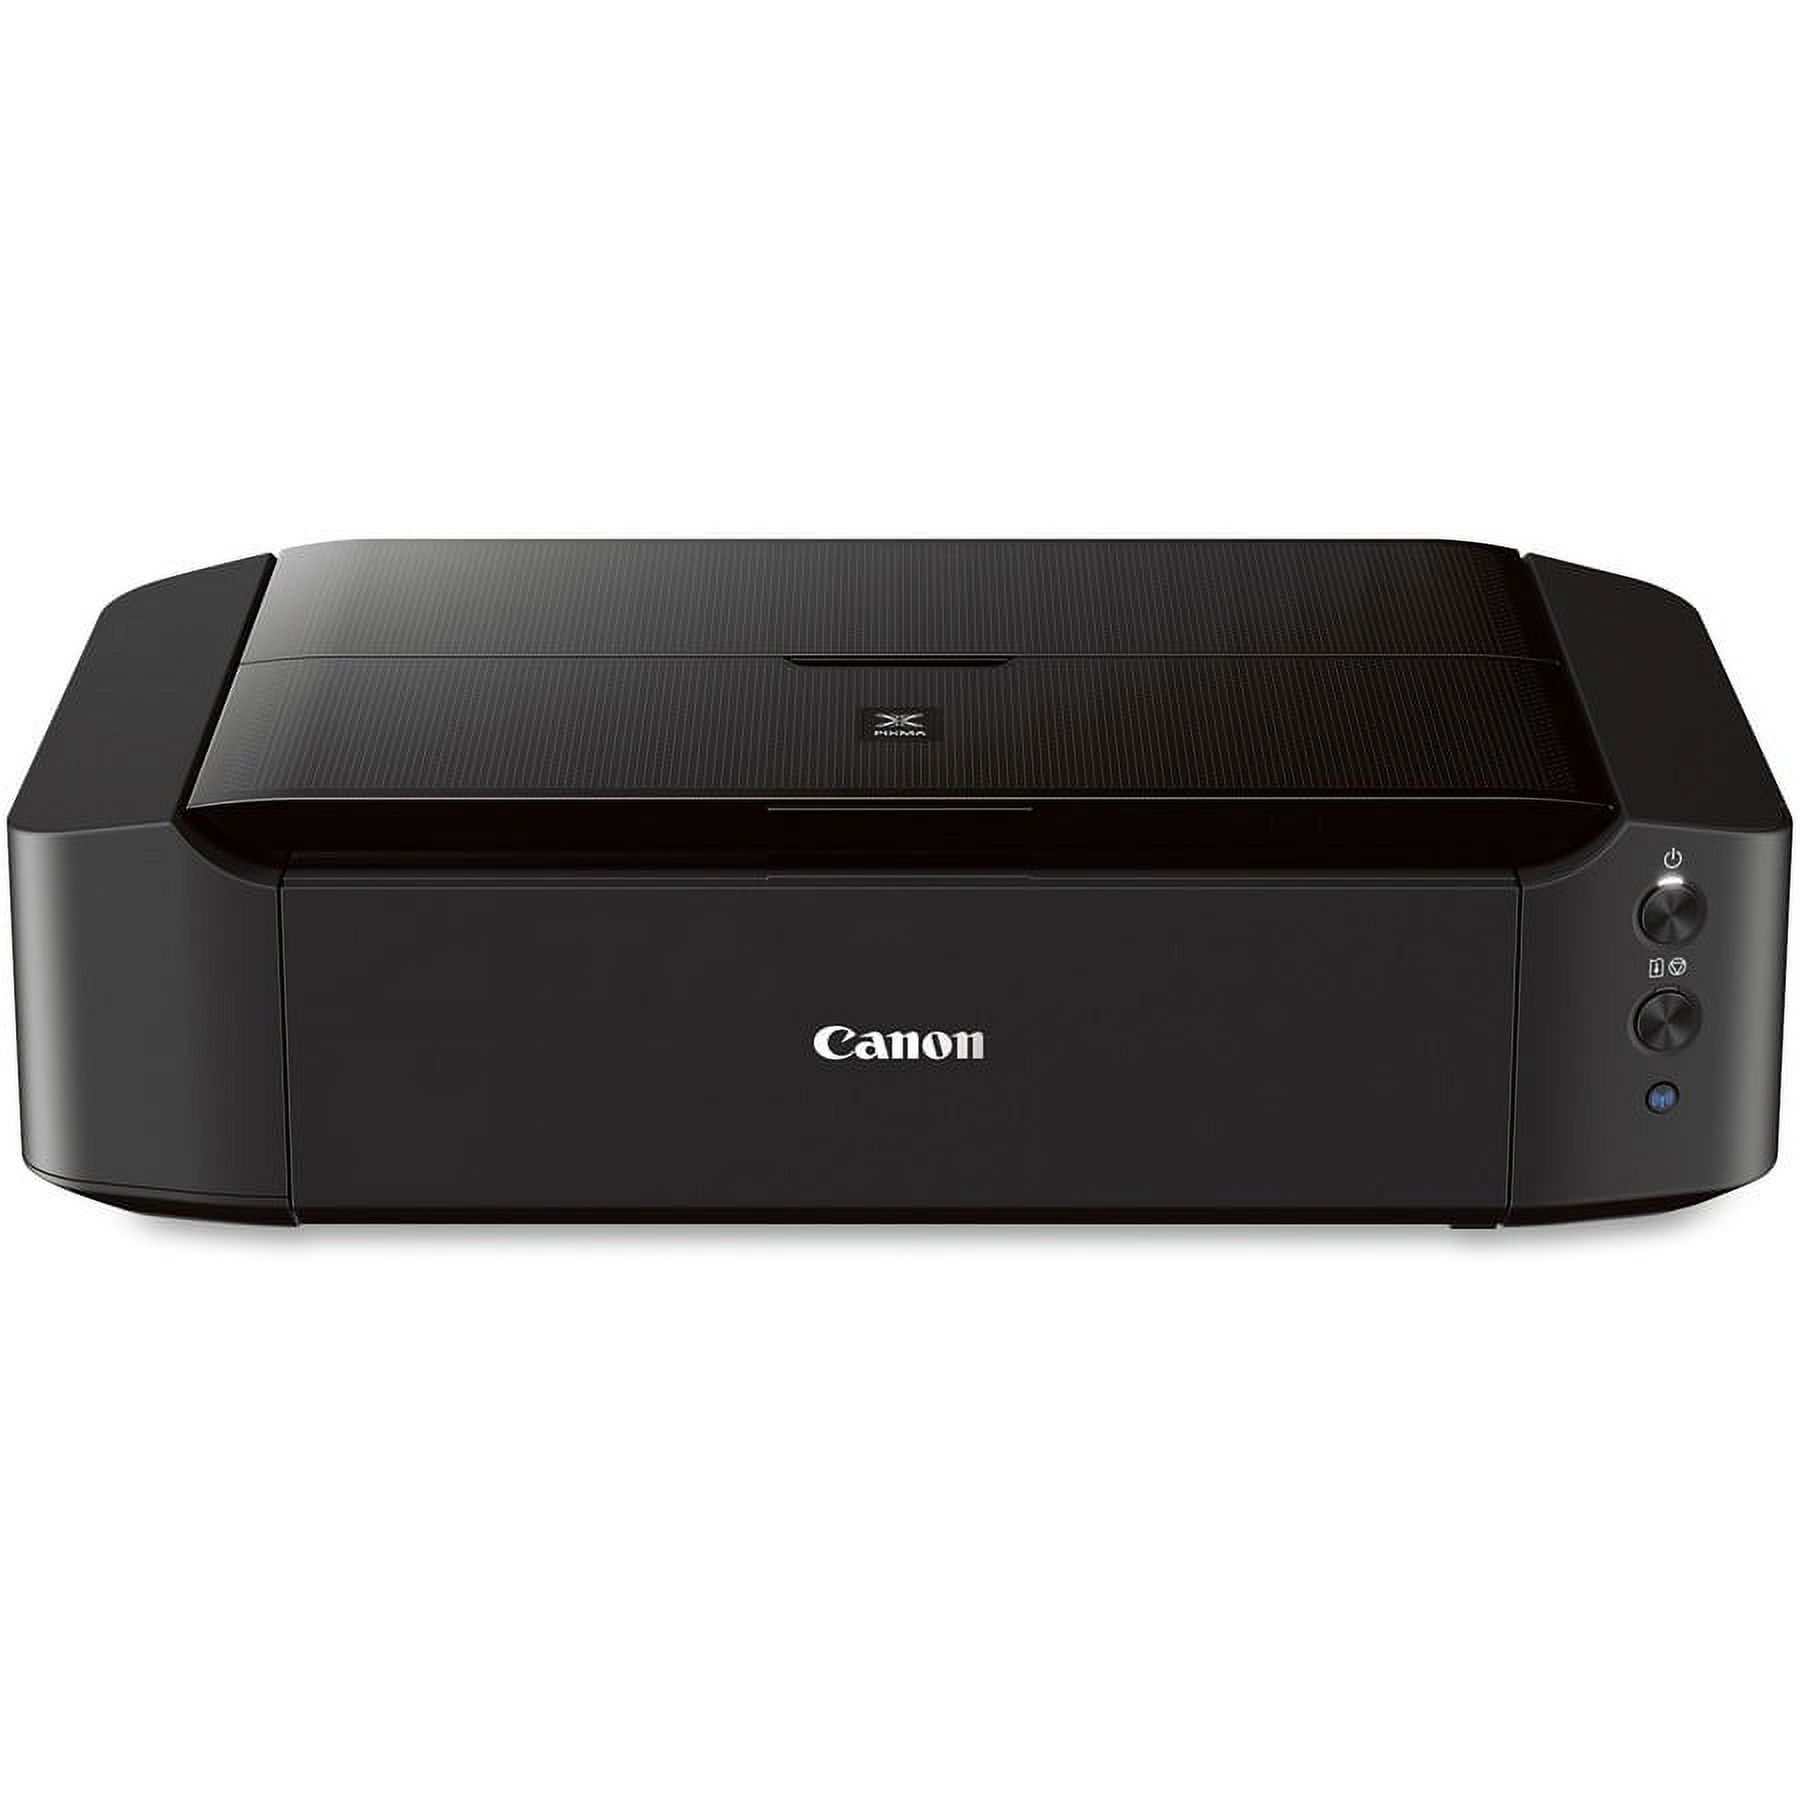 Canon Pixma iP8720 Wireless Desktop Inkjet Printer - Black - image 5 of 6